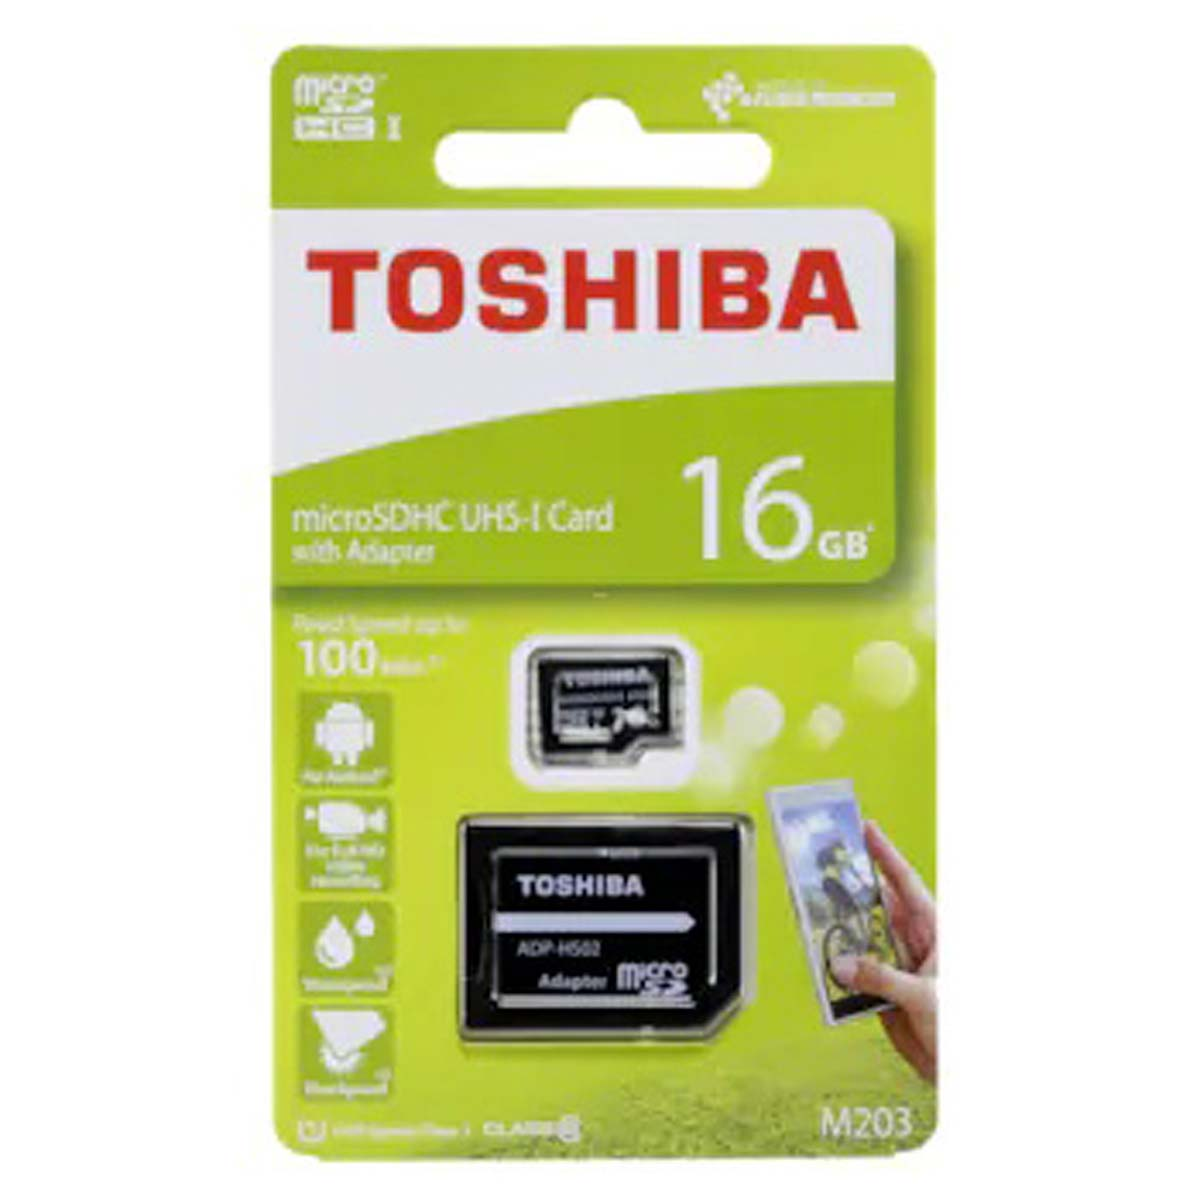 16 100 Micro-SDHC Mbit/s GB, TOSHIBA 41094, Speicherkarte,